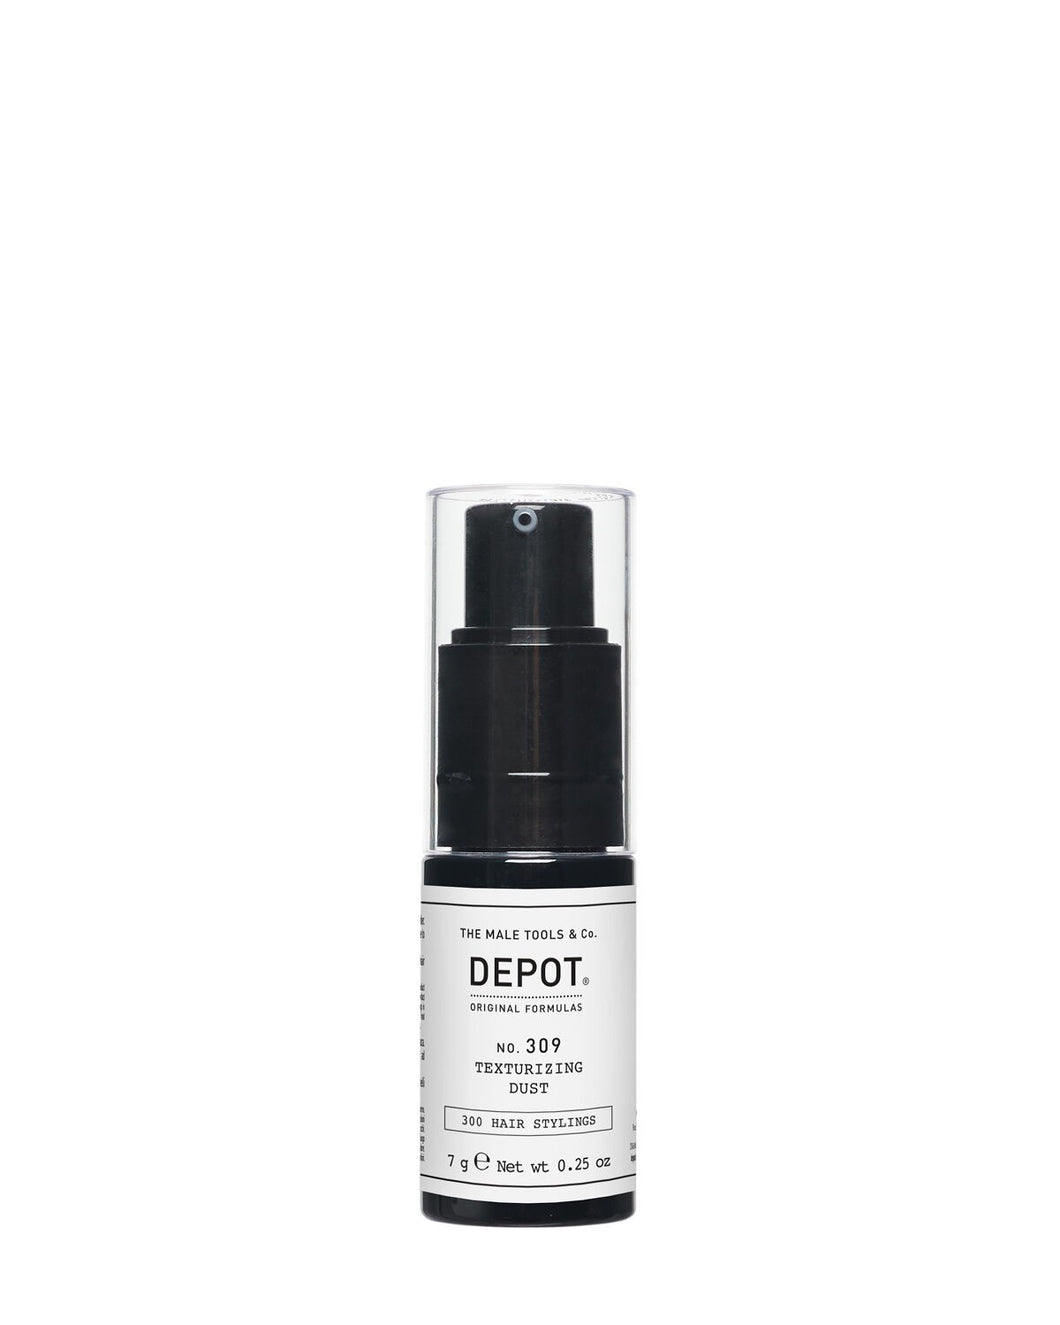 Depot- Texturizing Dust 309